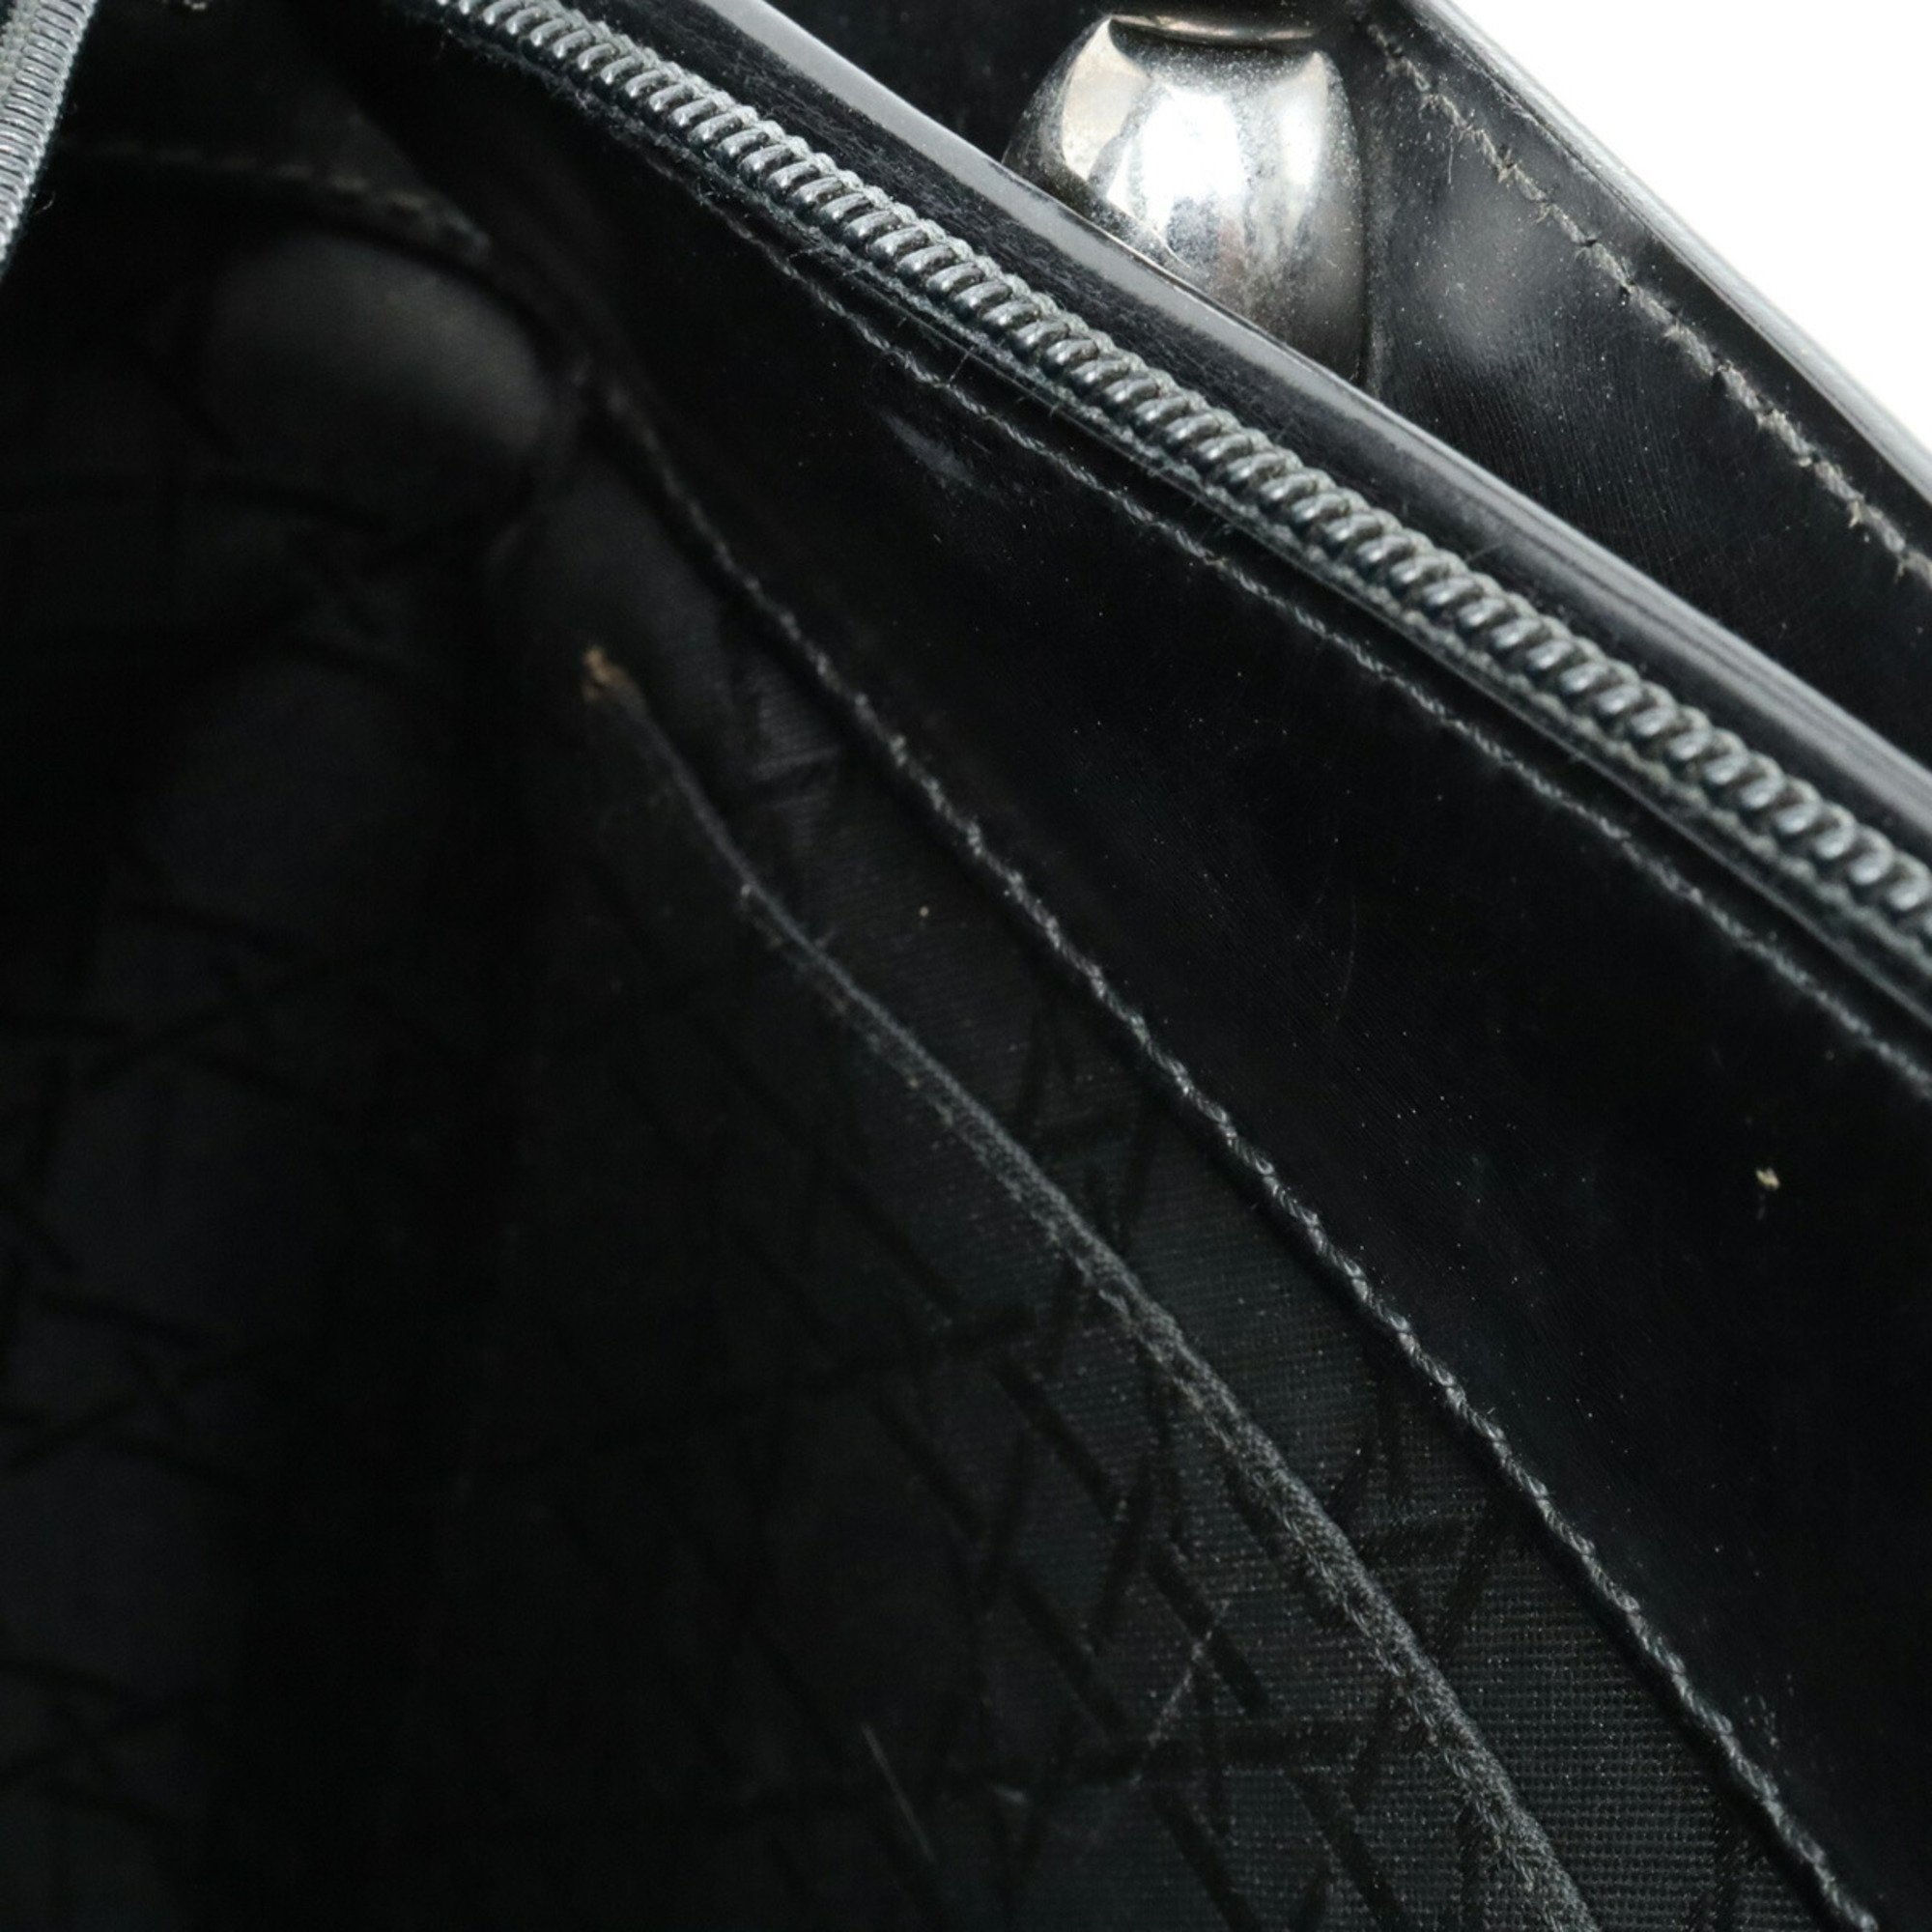 Christian Dior Lady Maris Pearl Handbag Tote Bag Leather Black